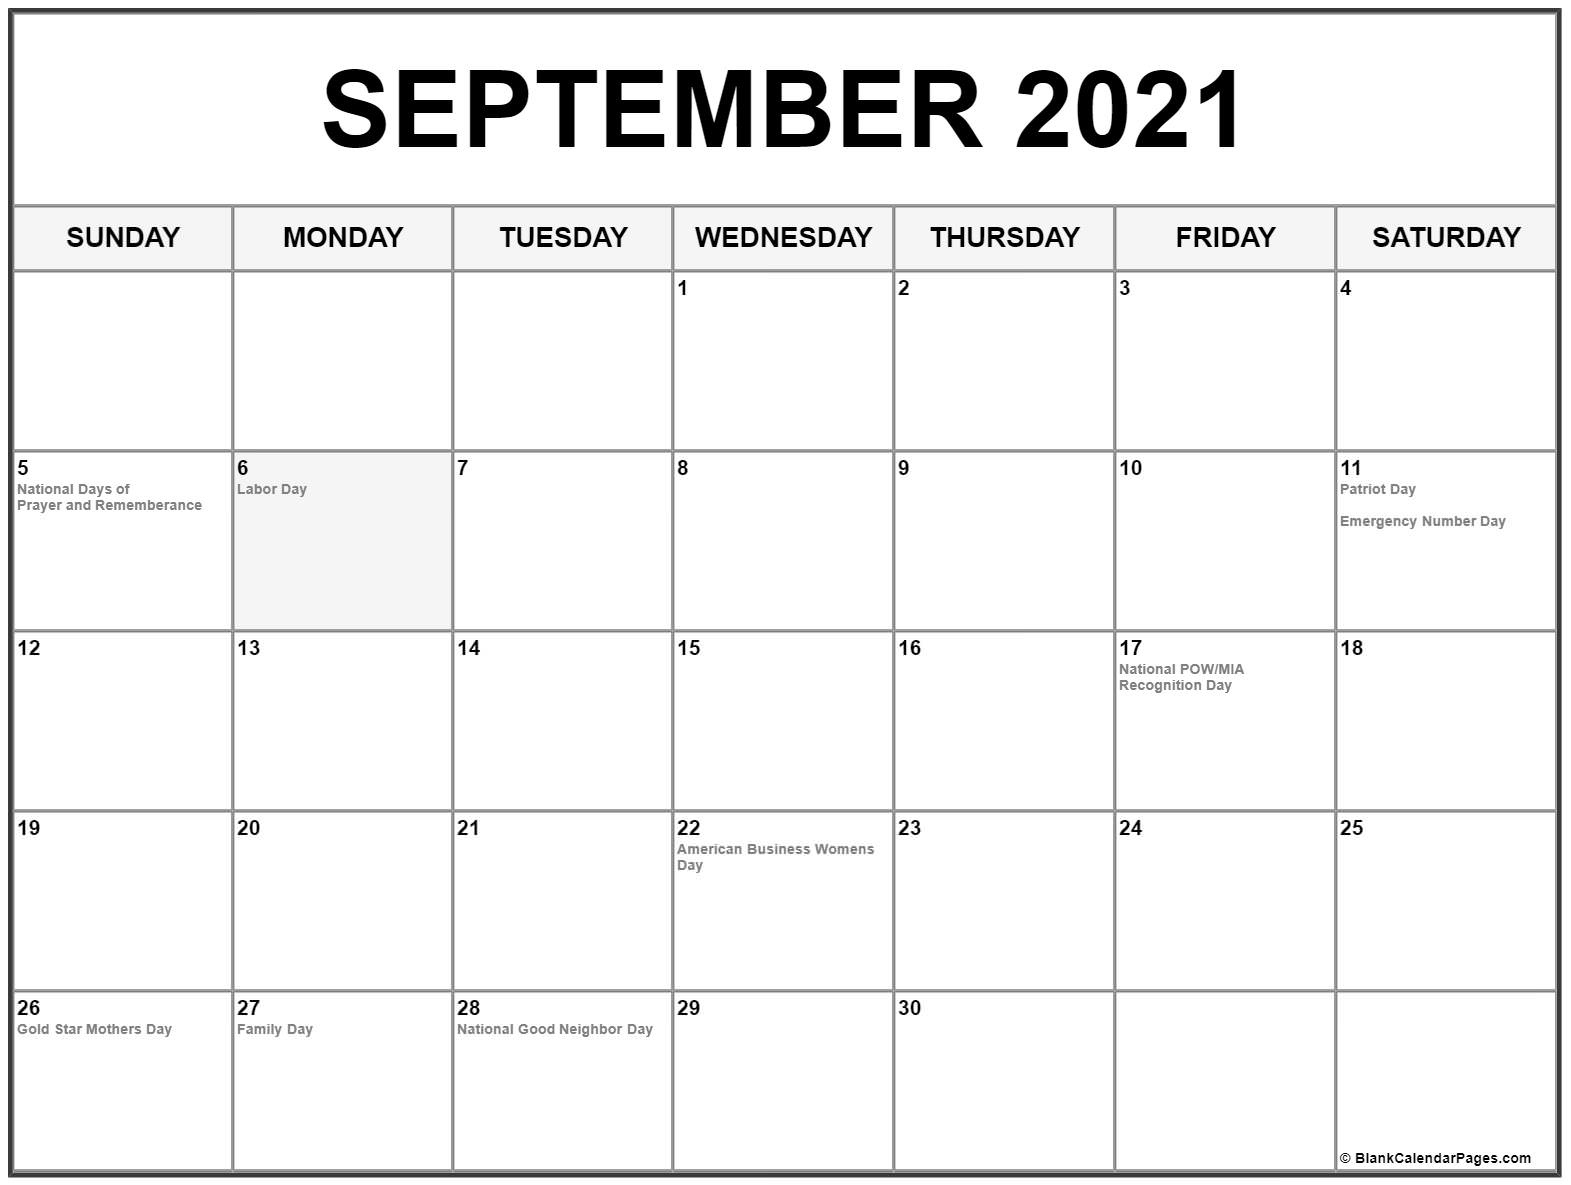 Collection Of September 2021 Calendars With Holidays September 2021 Calendar Virgo